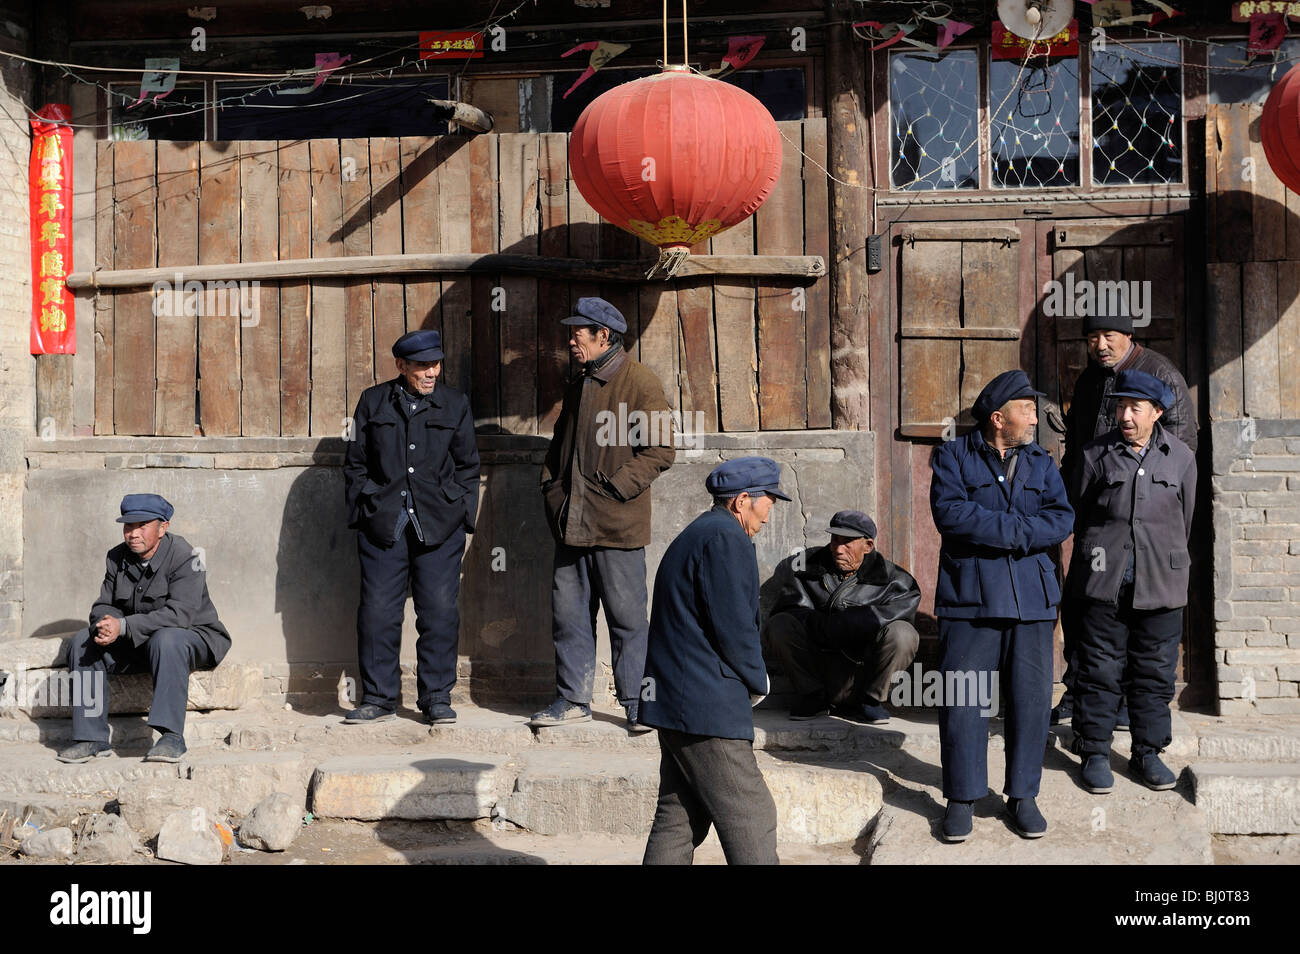 Chinesisch im Alter Menschen Erholung in Nuanquan Stadt, Xuxian County, Provinz Hebei, China. 2. März 2010 Stockfoto